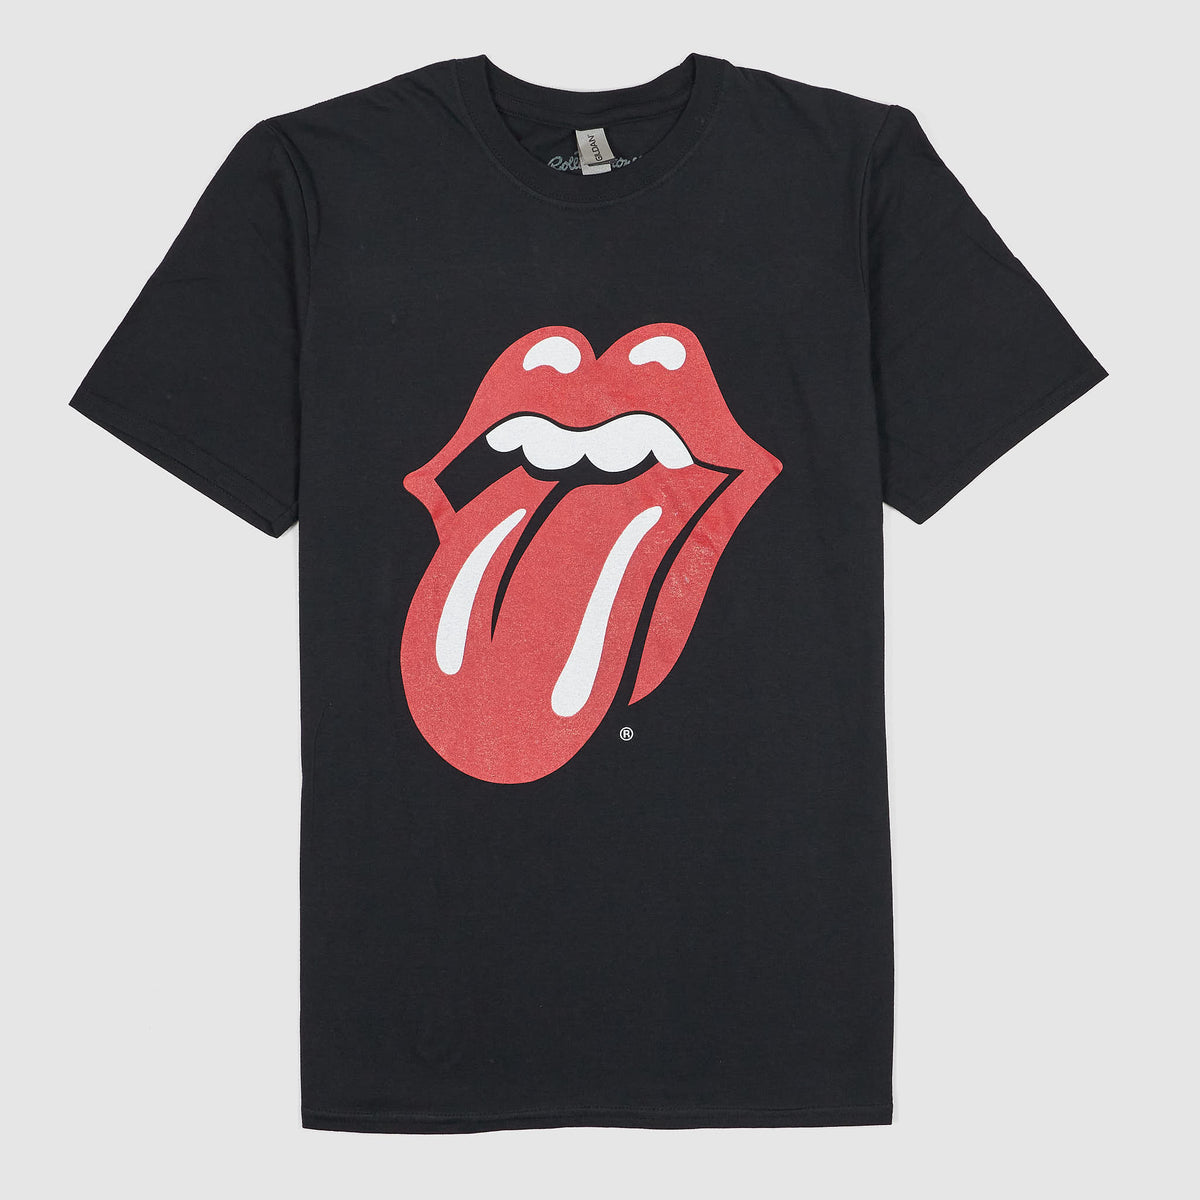 The Rolling Stones Crew Neck Rock T-Shirt